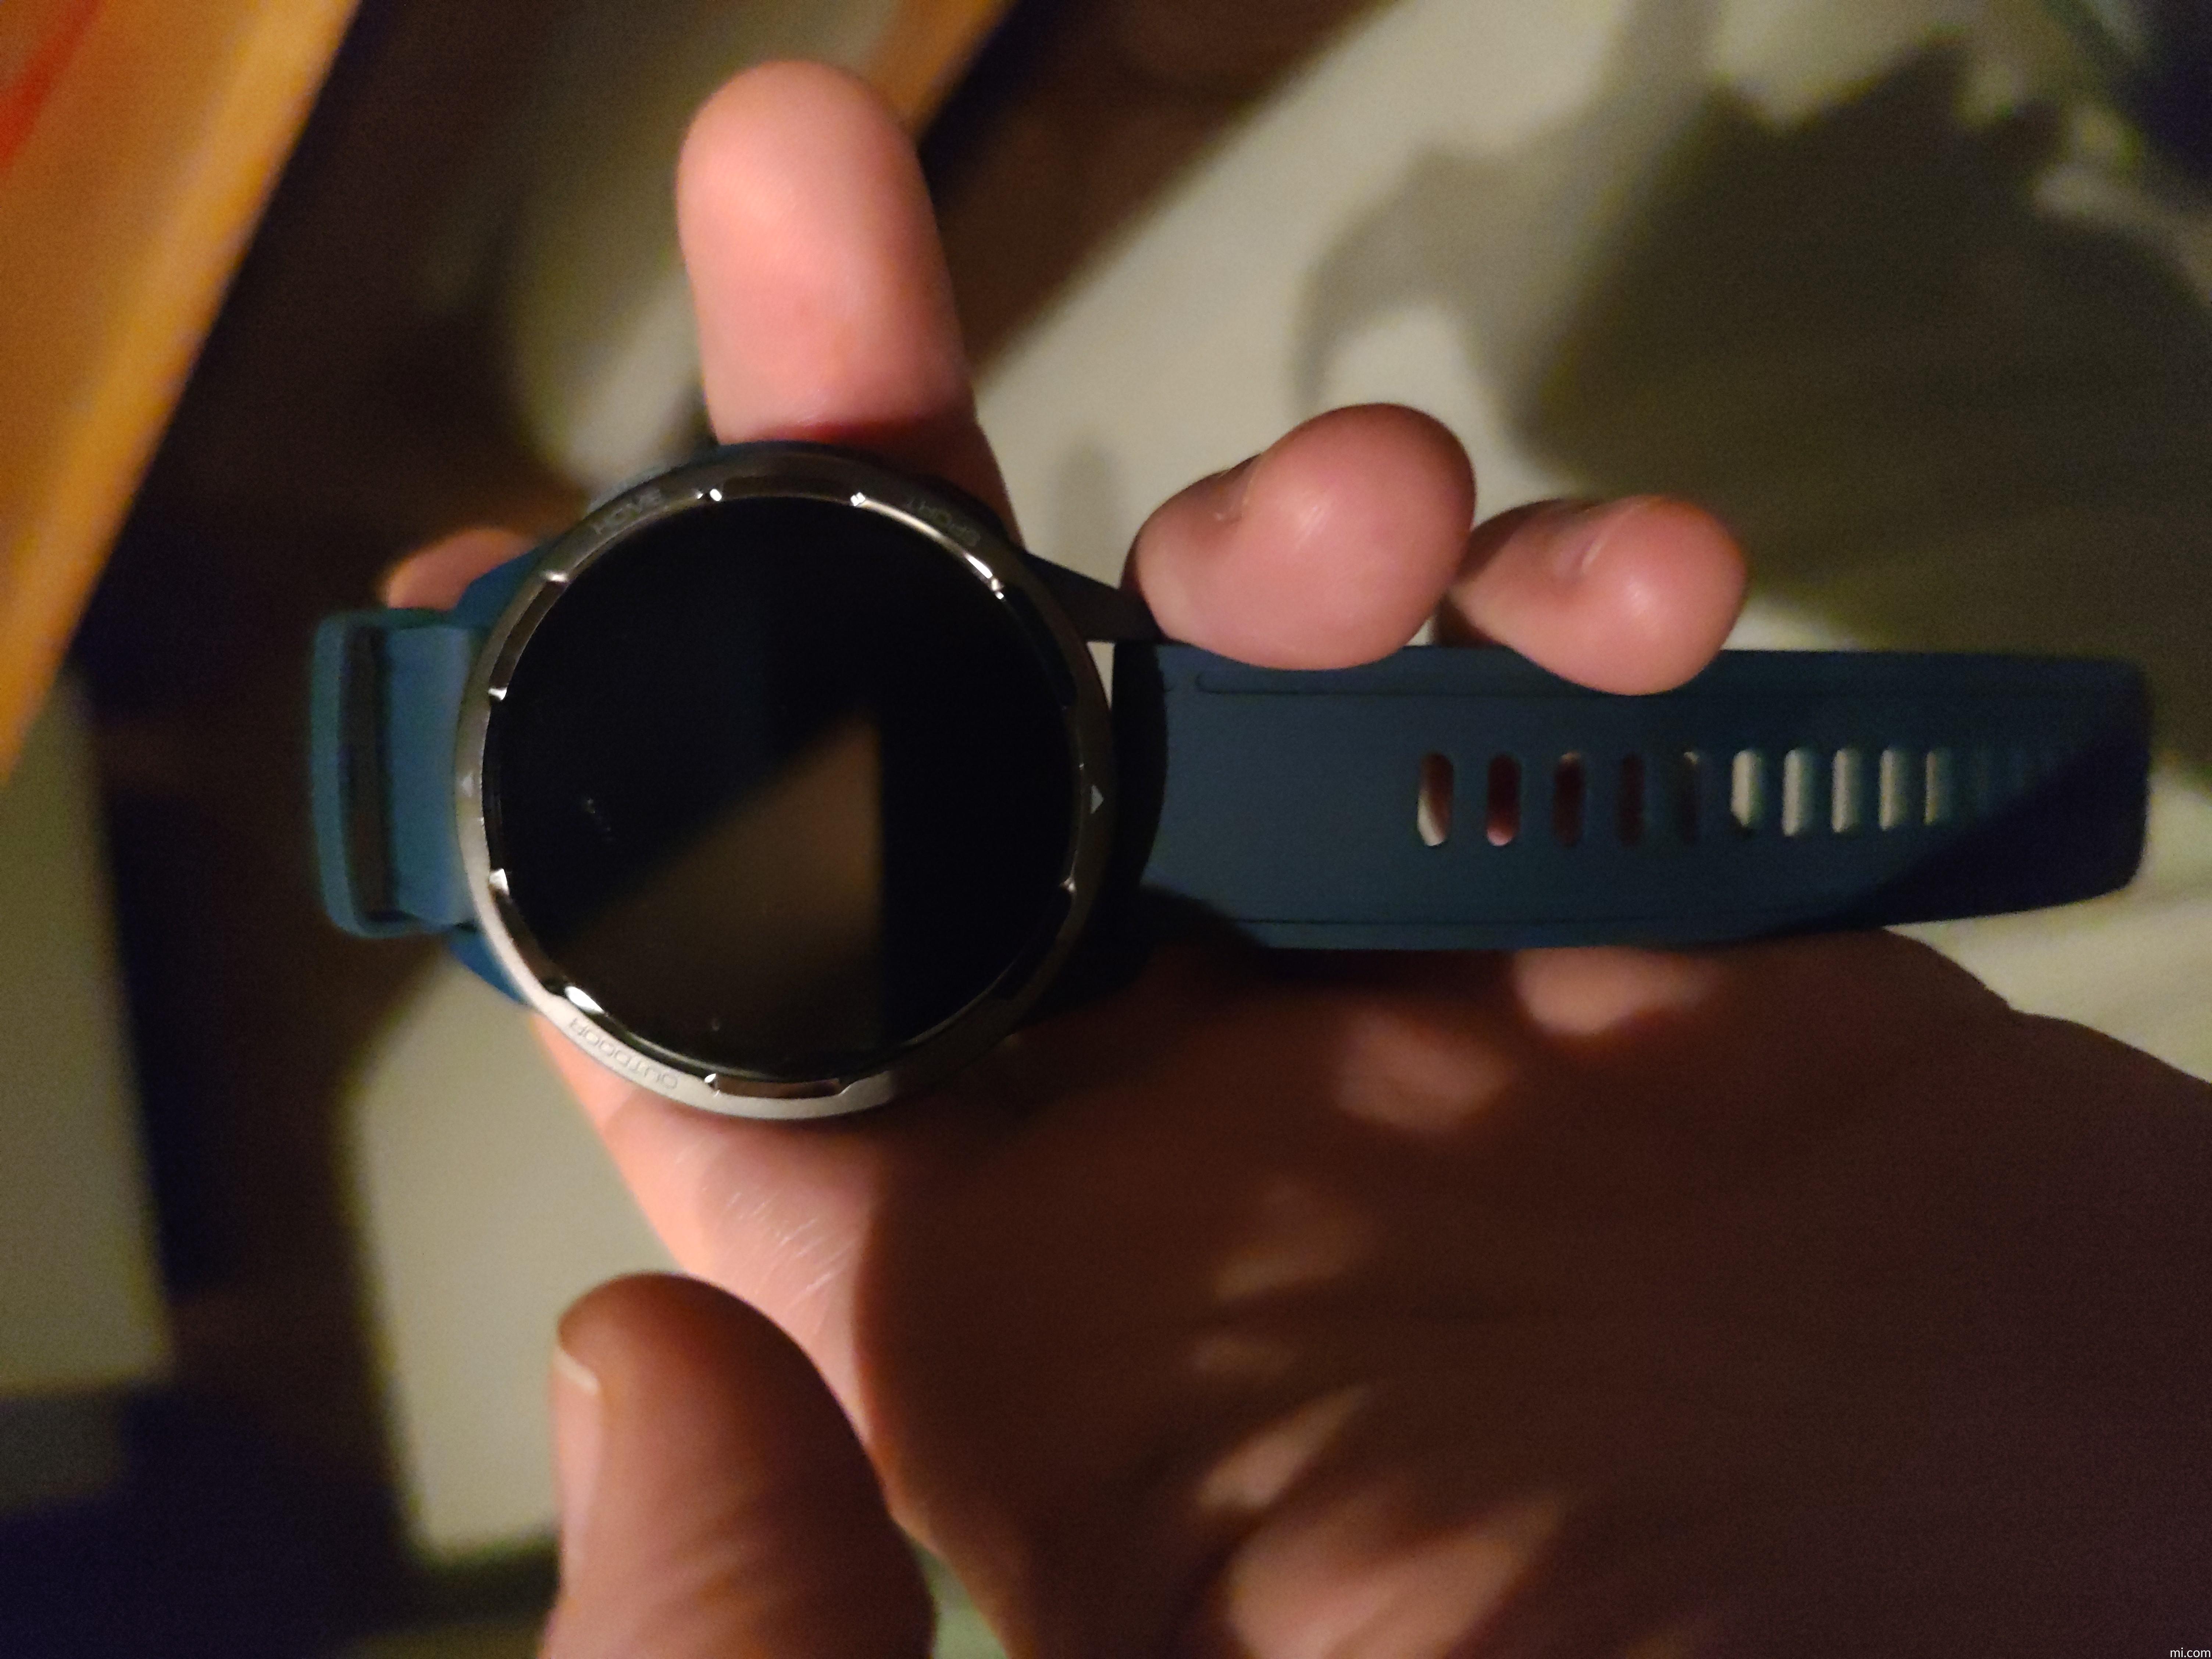 Caída brutal: este reloj inteligente de Xiaomi está 109,11 euros